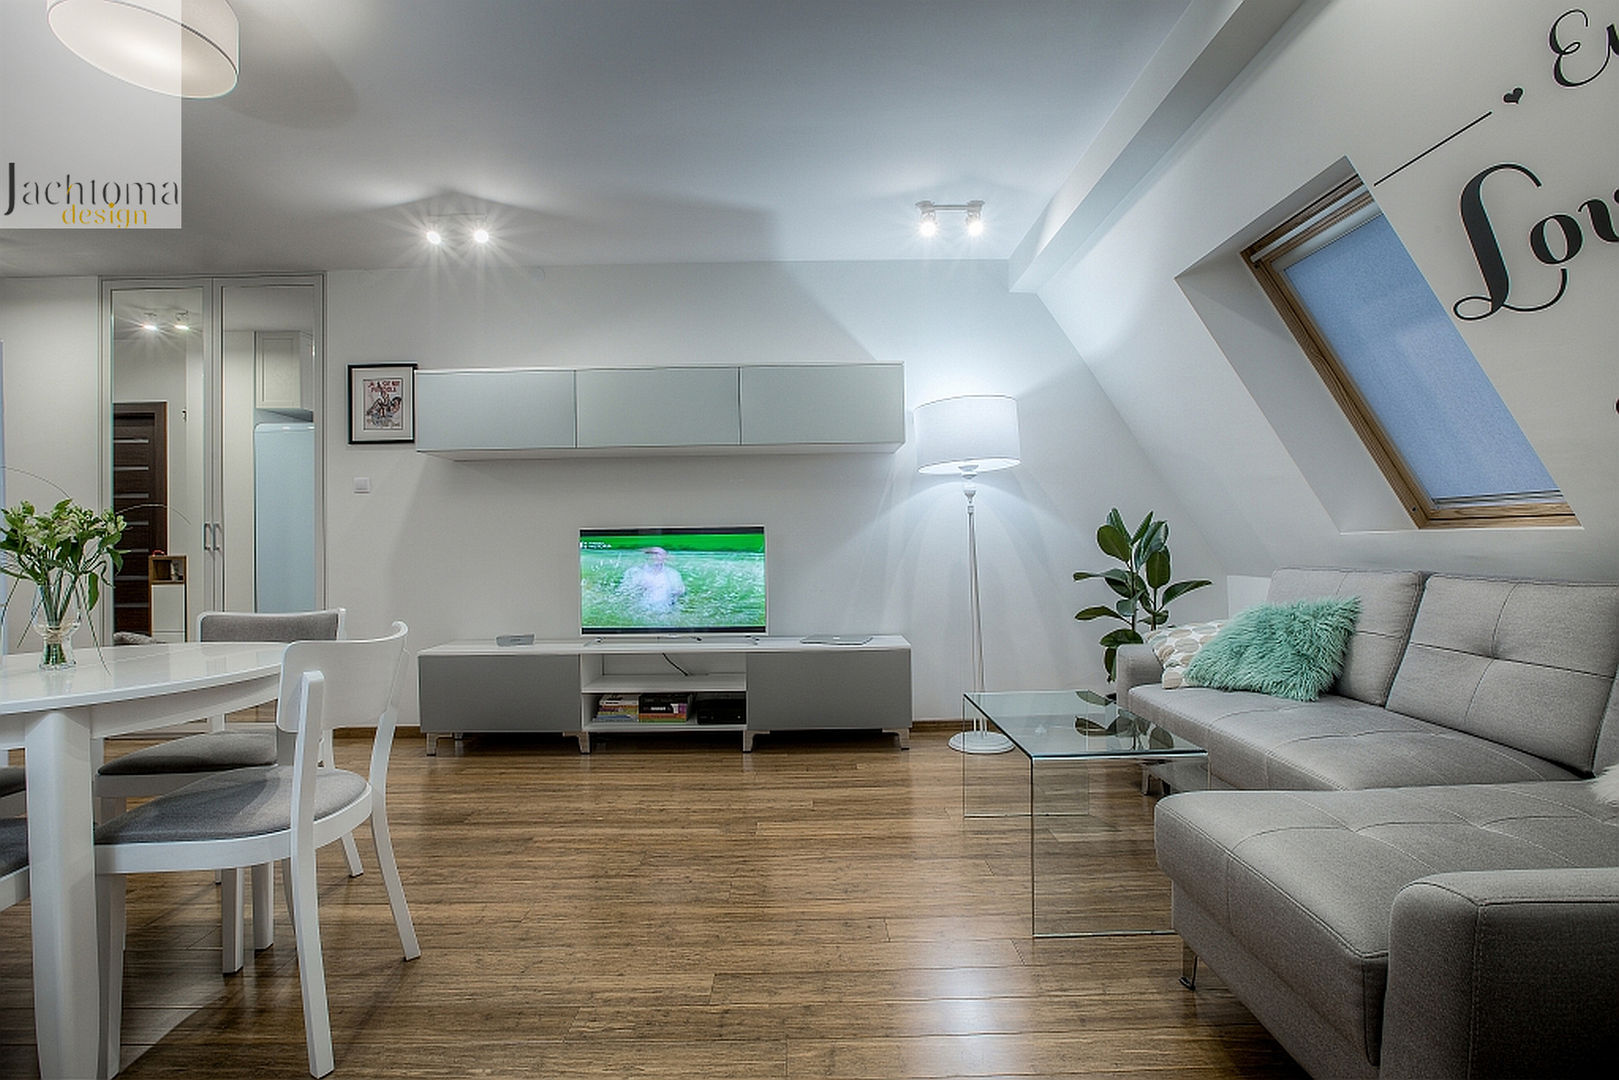 Mieszkanie na poddaszu, Jachtoma design Jachtoma design Scandinavian style living room Bamboo Green